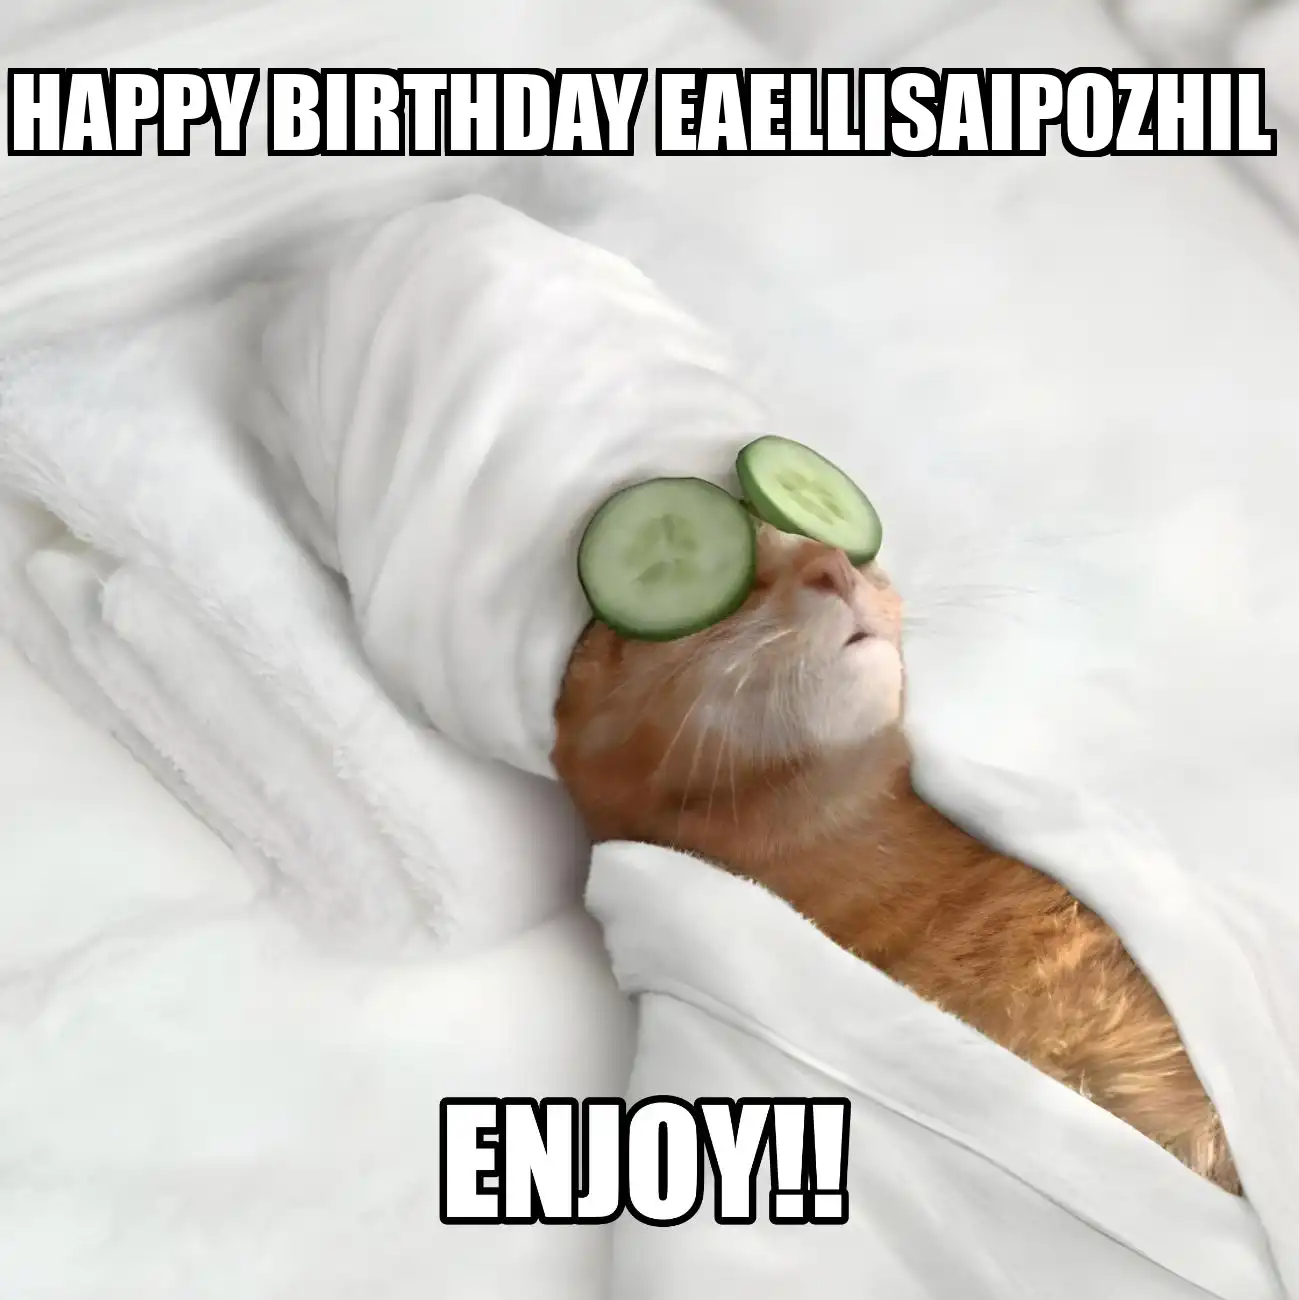 Happy Birthday Eaellisaipozhil Enjoy Cat Meme